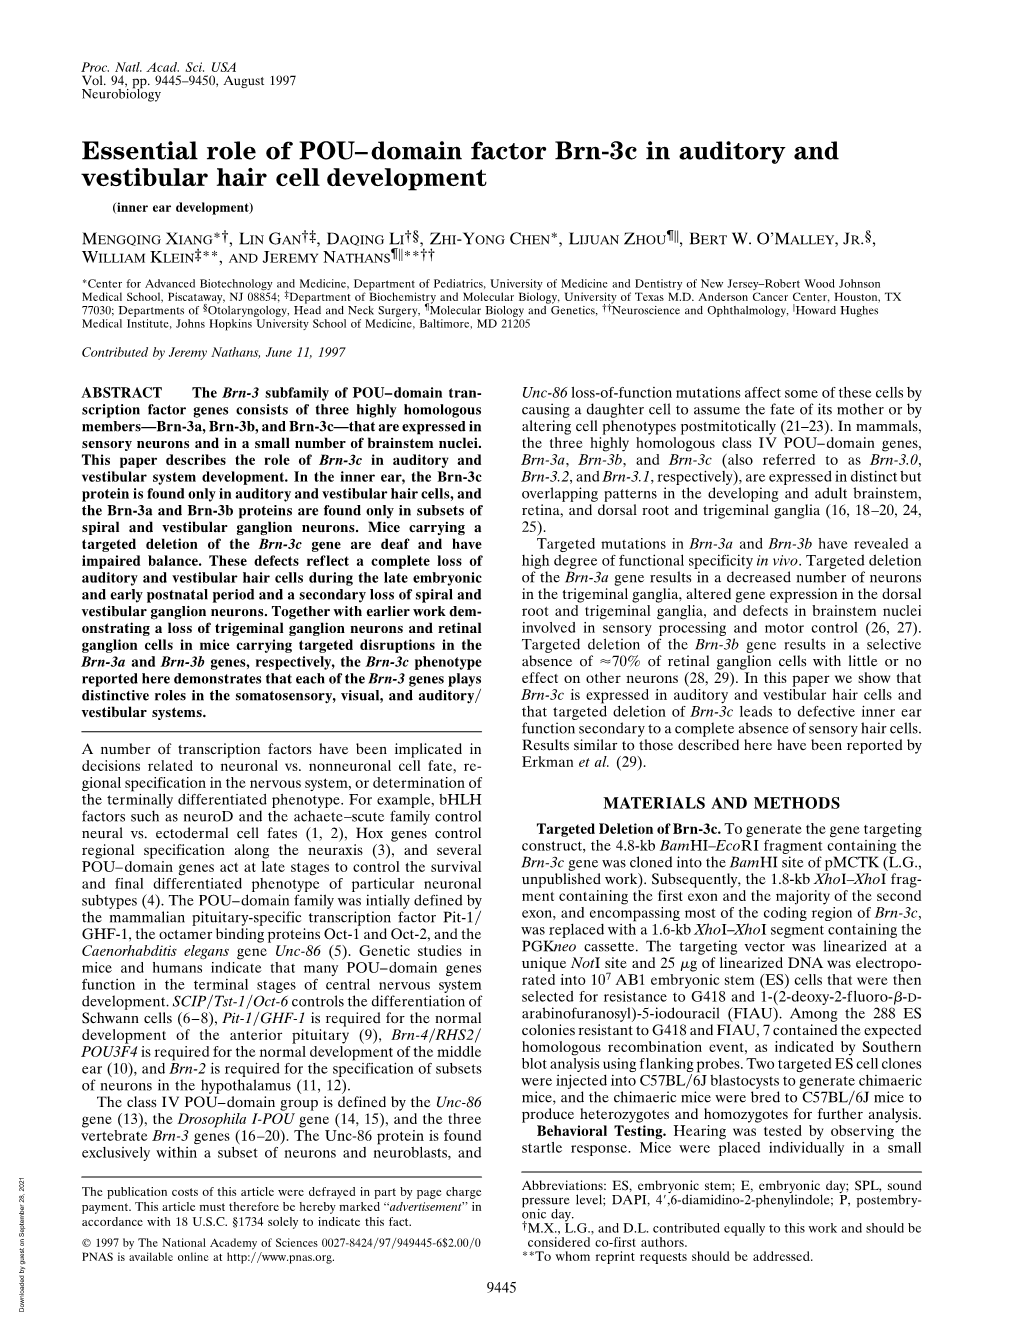 Essential Role of POU–Domain Factor Brn-3C in Auditory and Vestibular Hair Cell Development (Inner Ear Development)